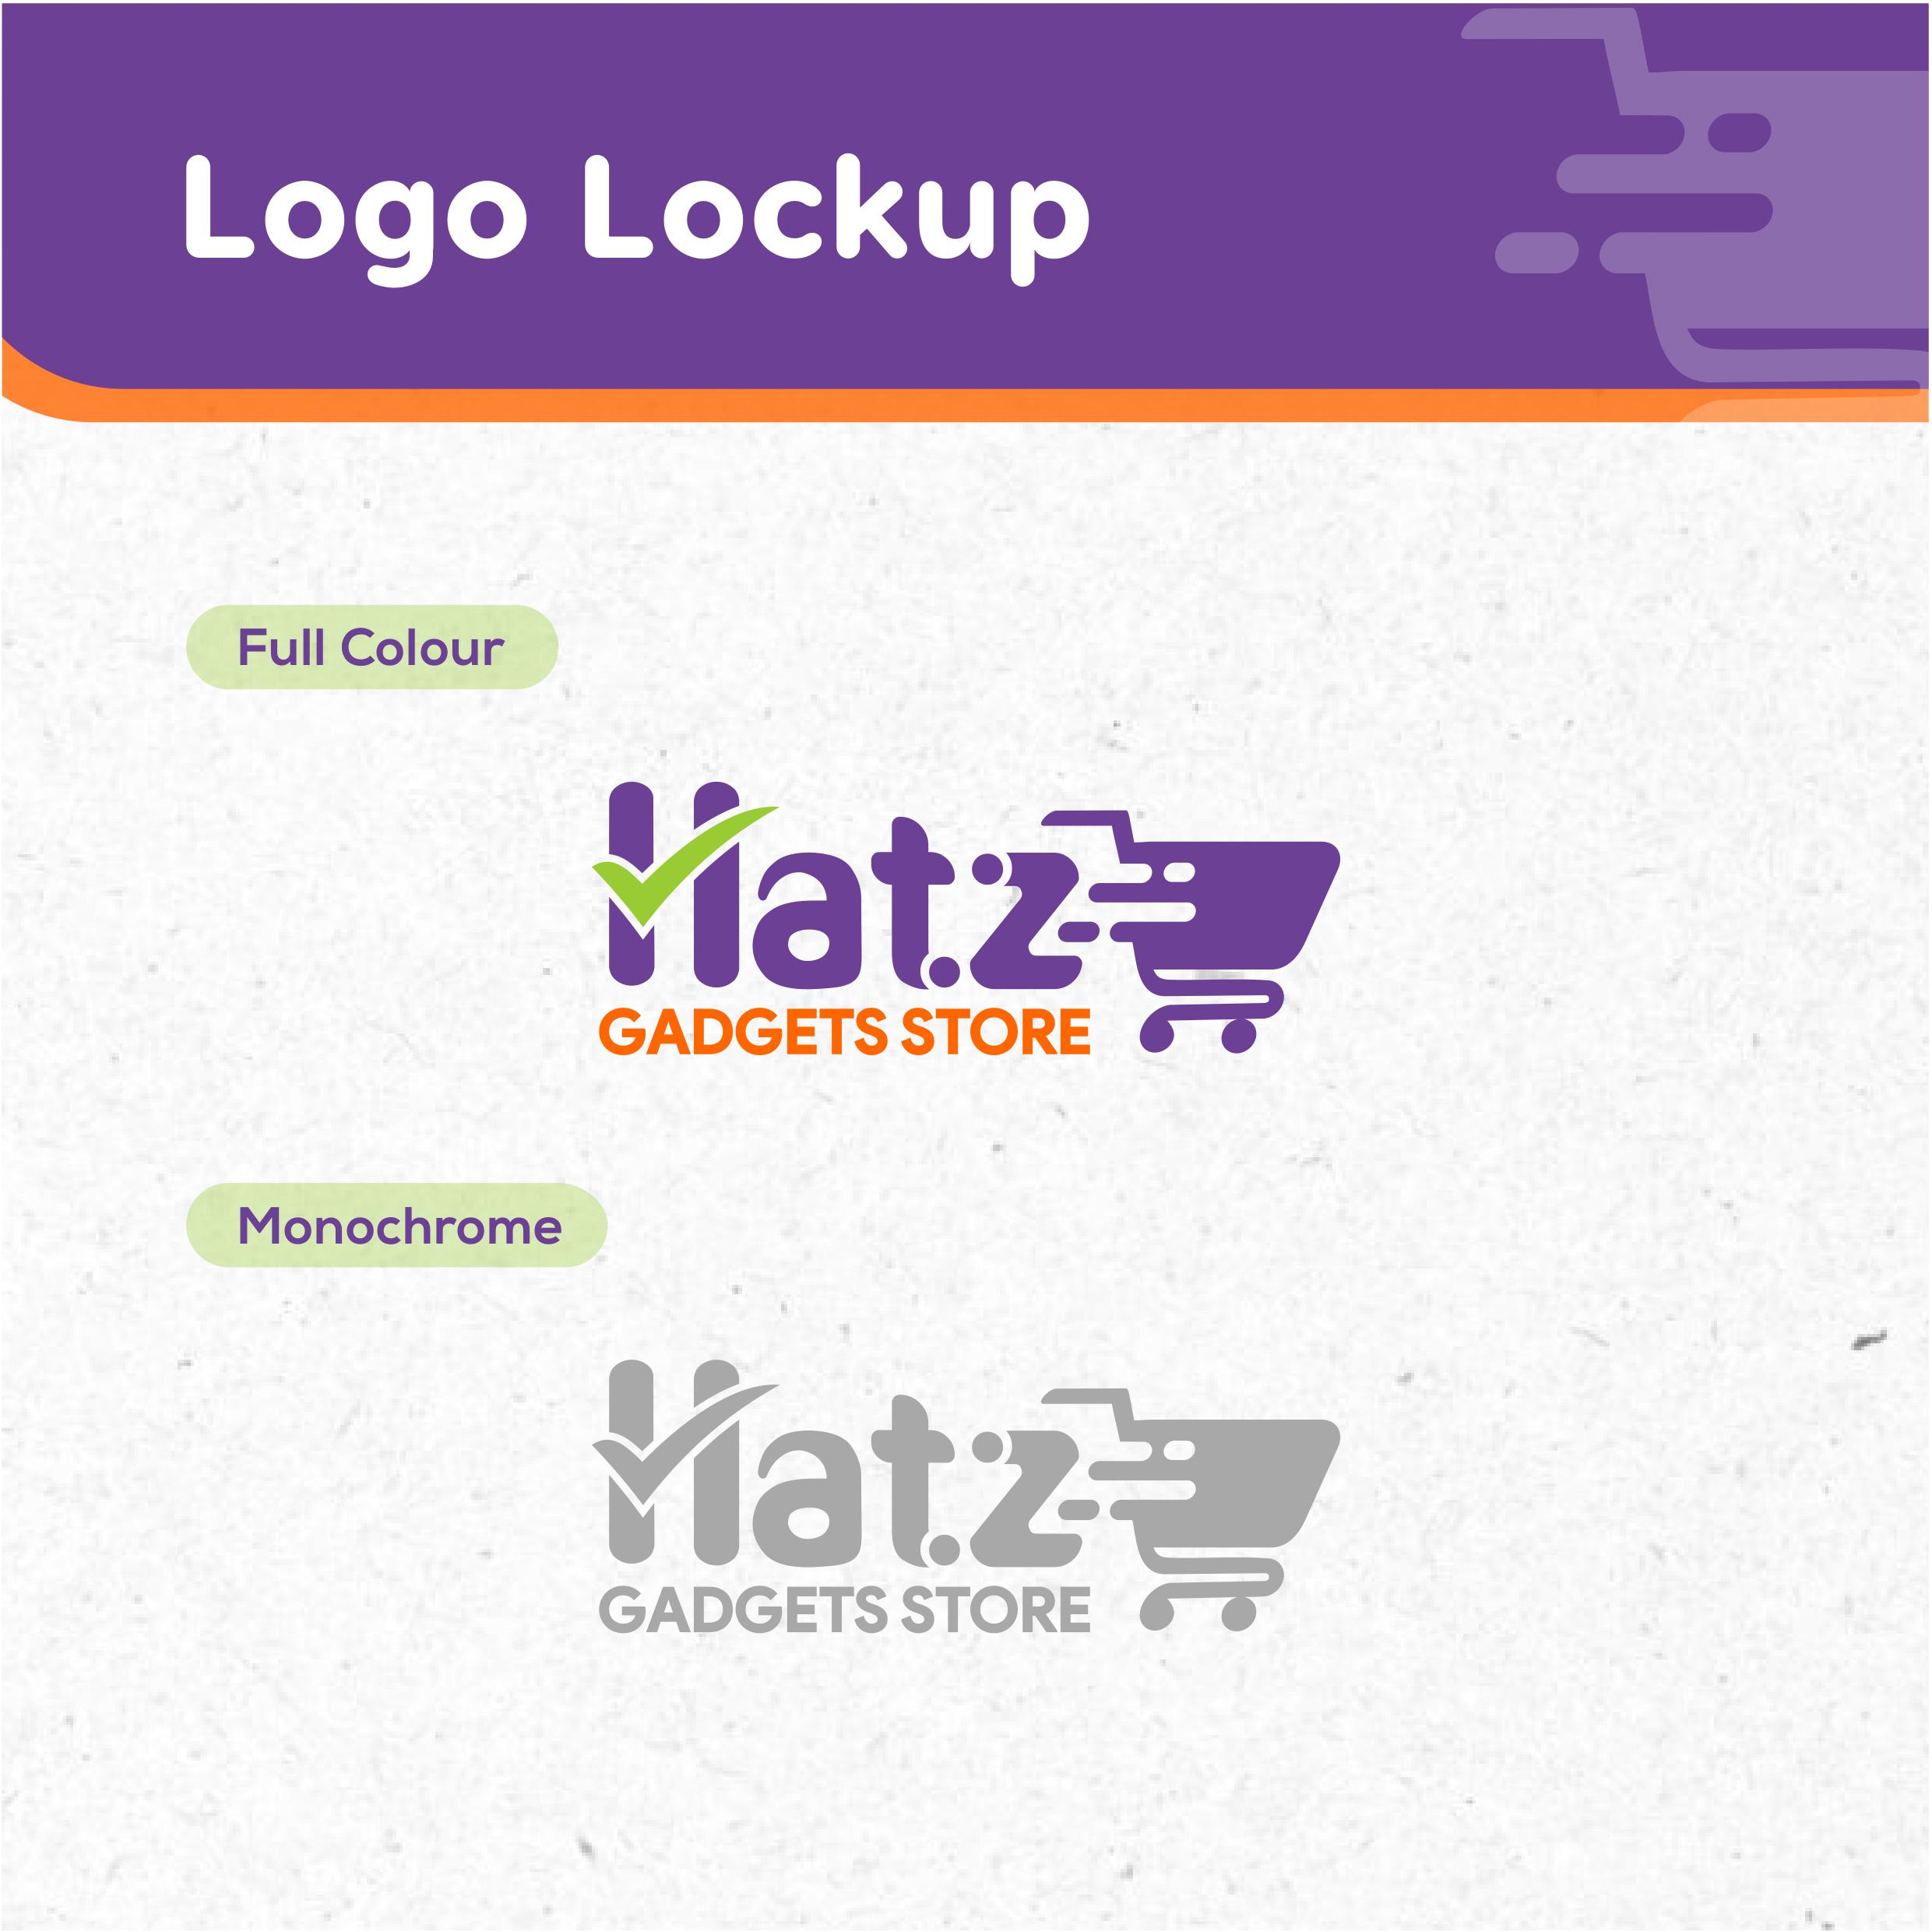 Brand Logo Lockup